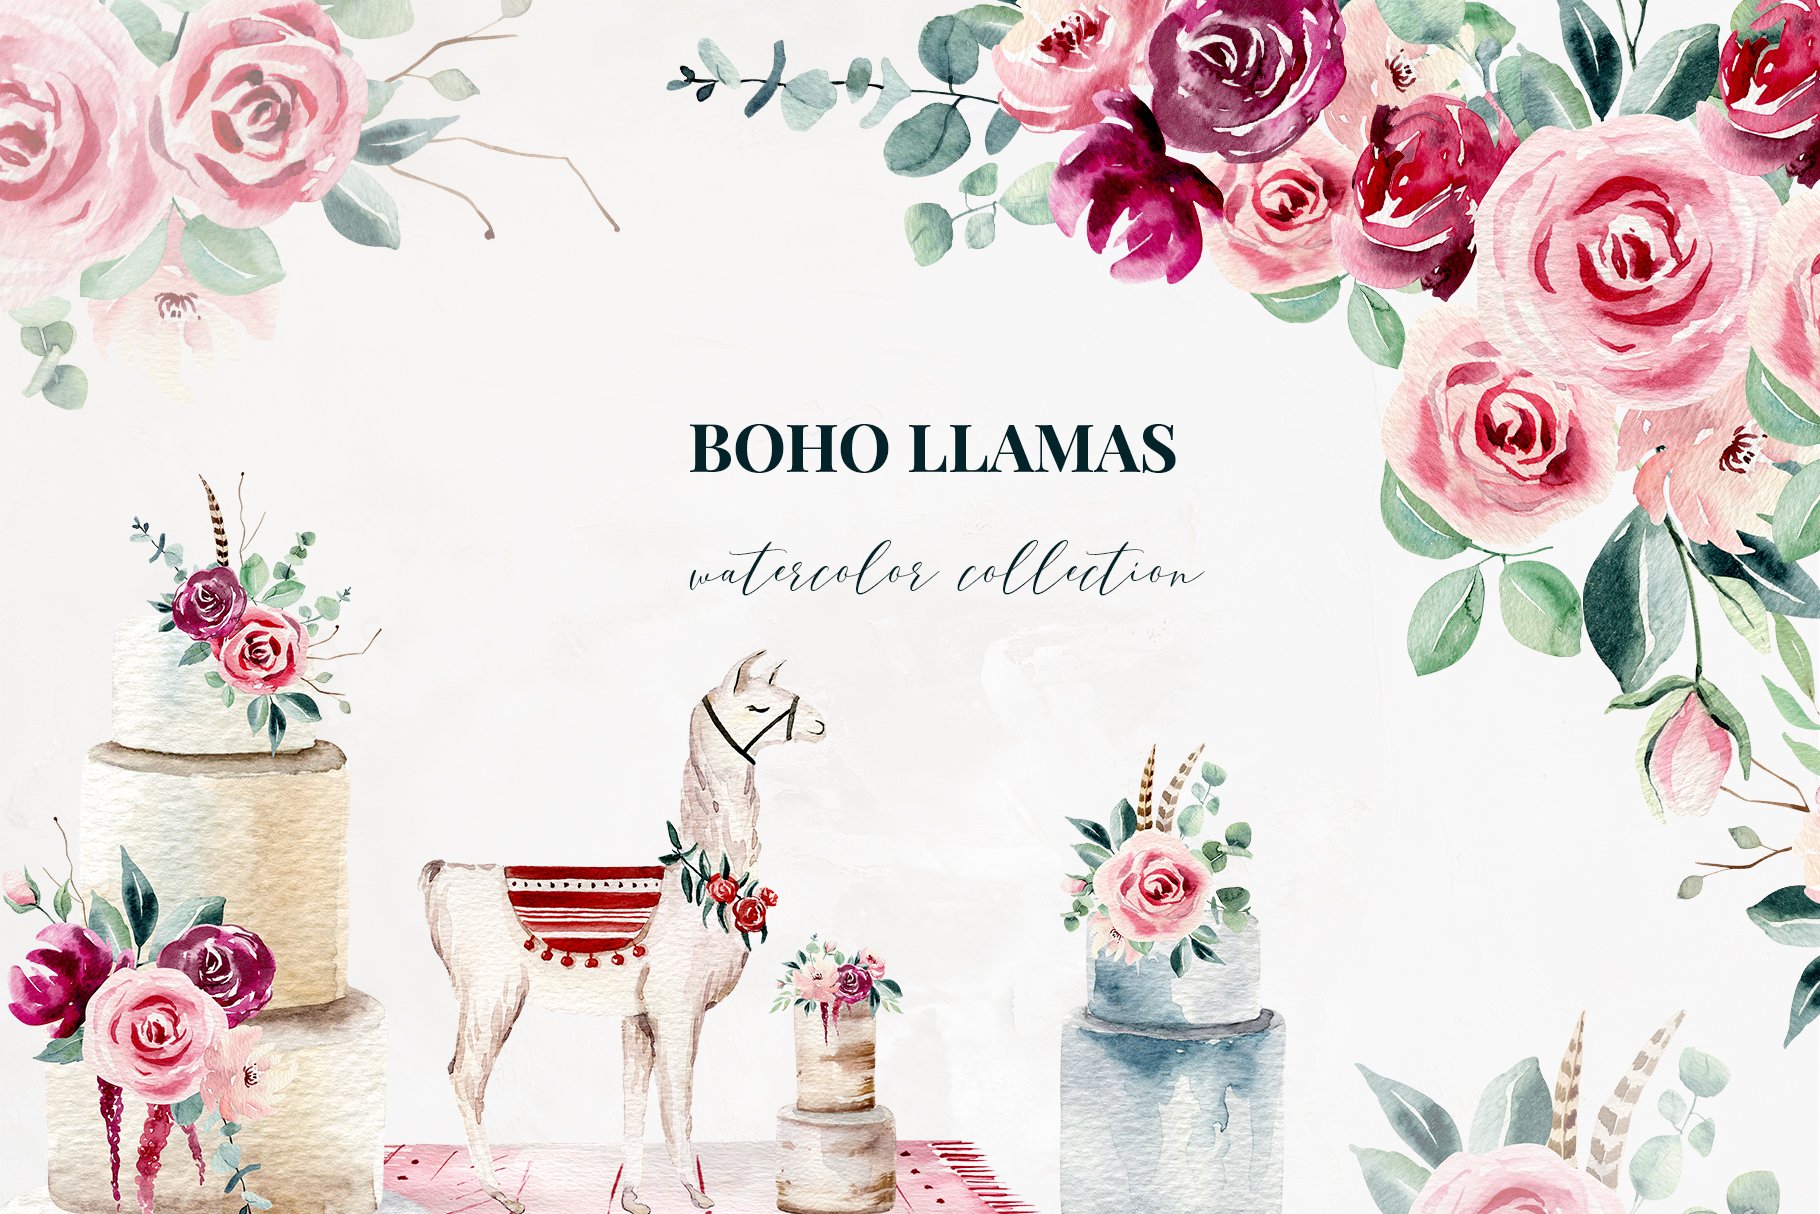 Llama's wedding clipart cover image.